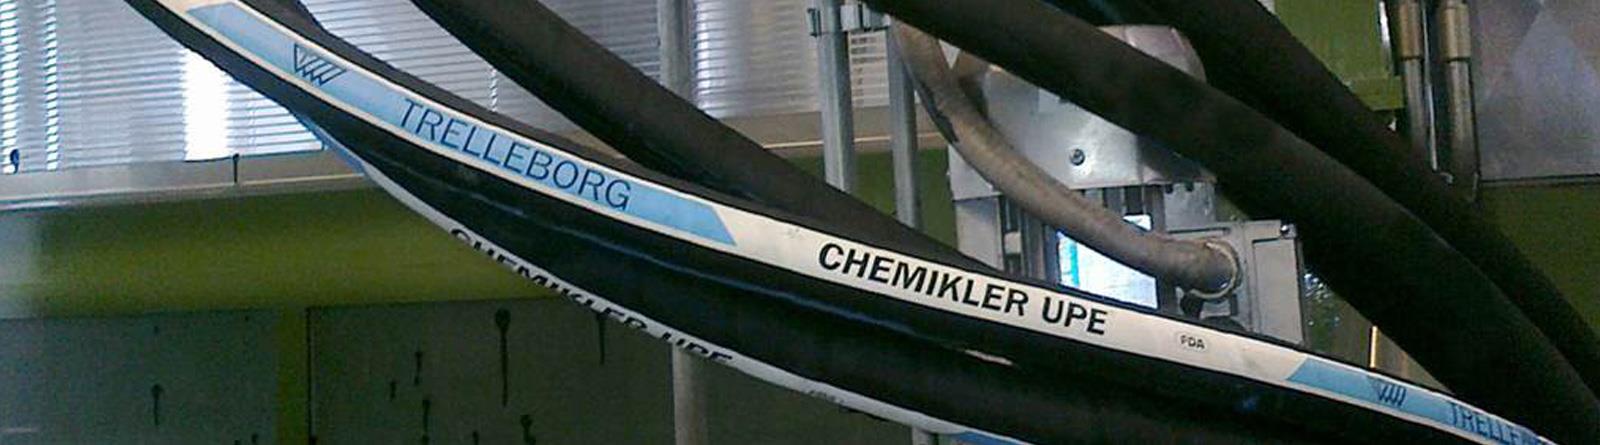 Trelleborg Chemikler UPE Chemical & Corrosive Products Transfer